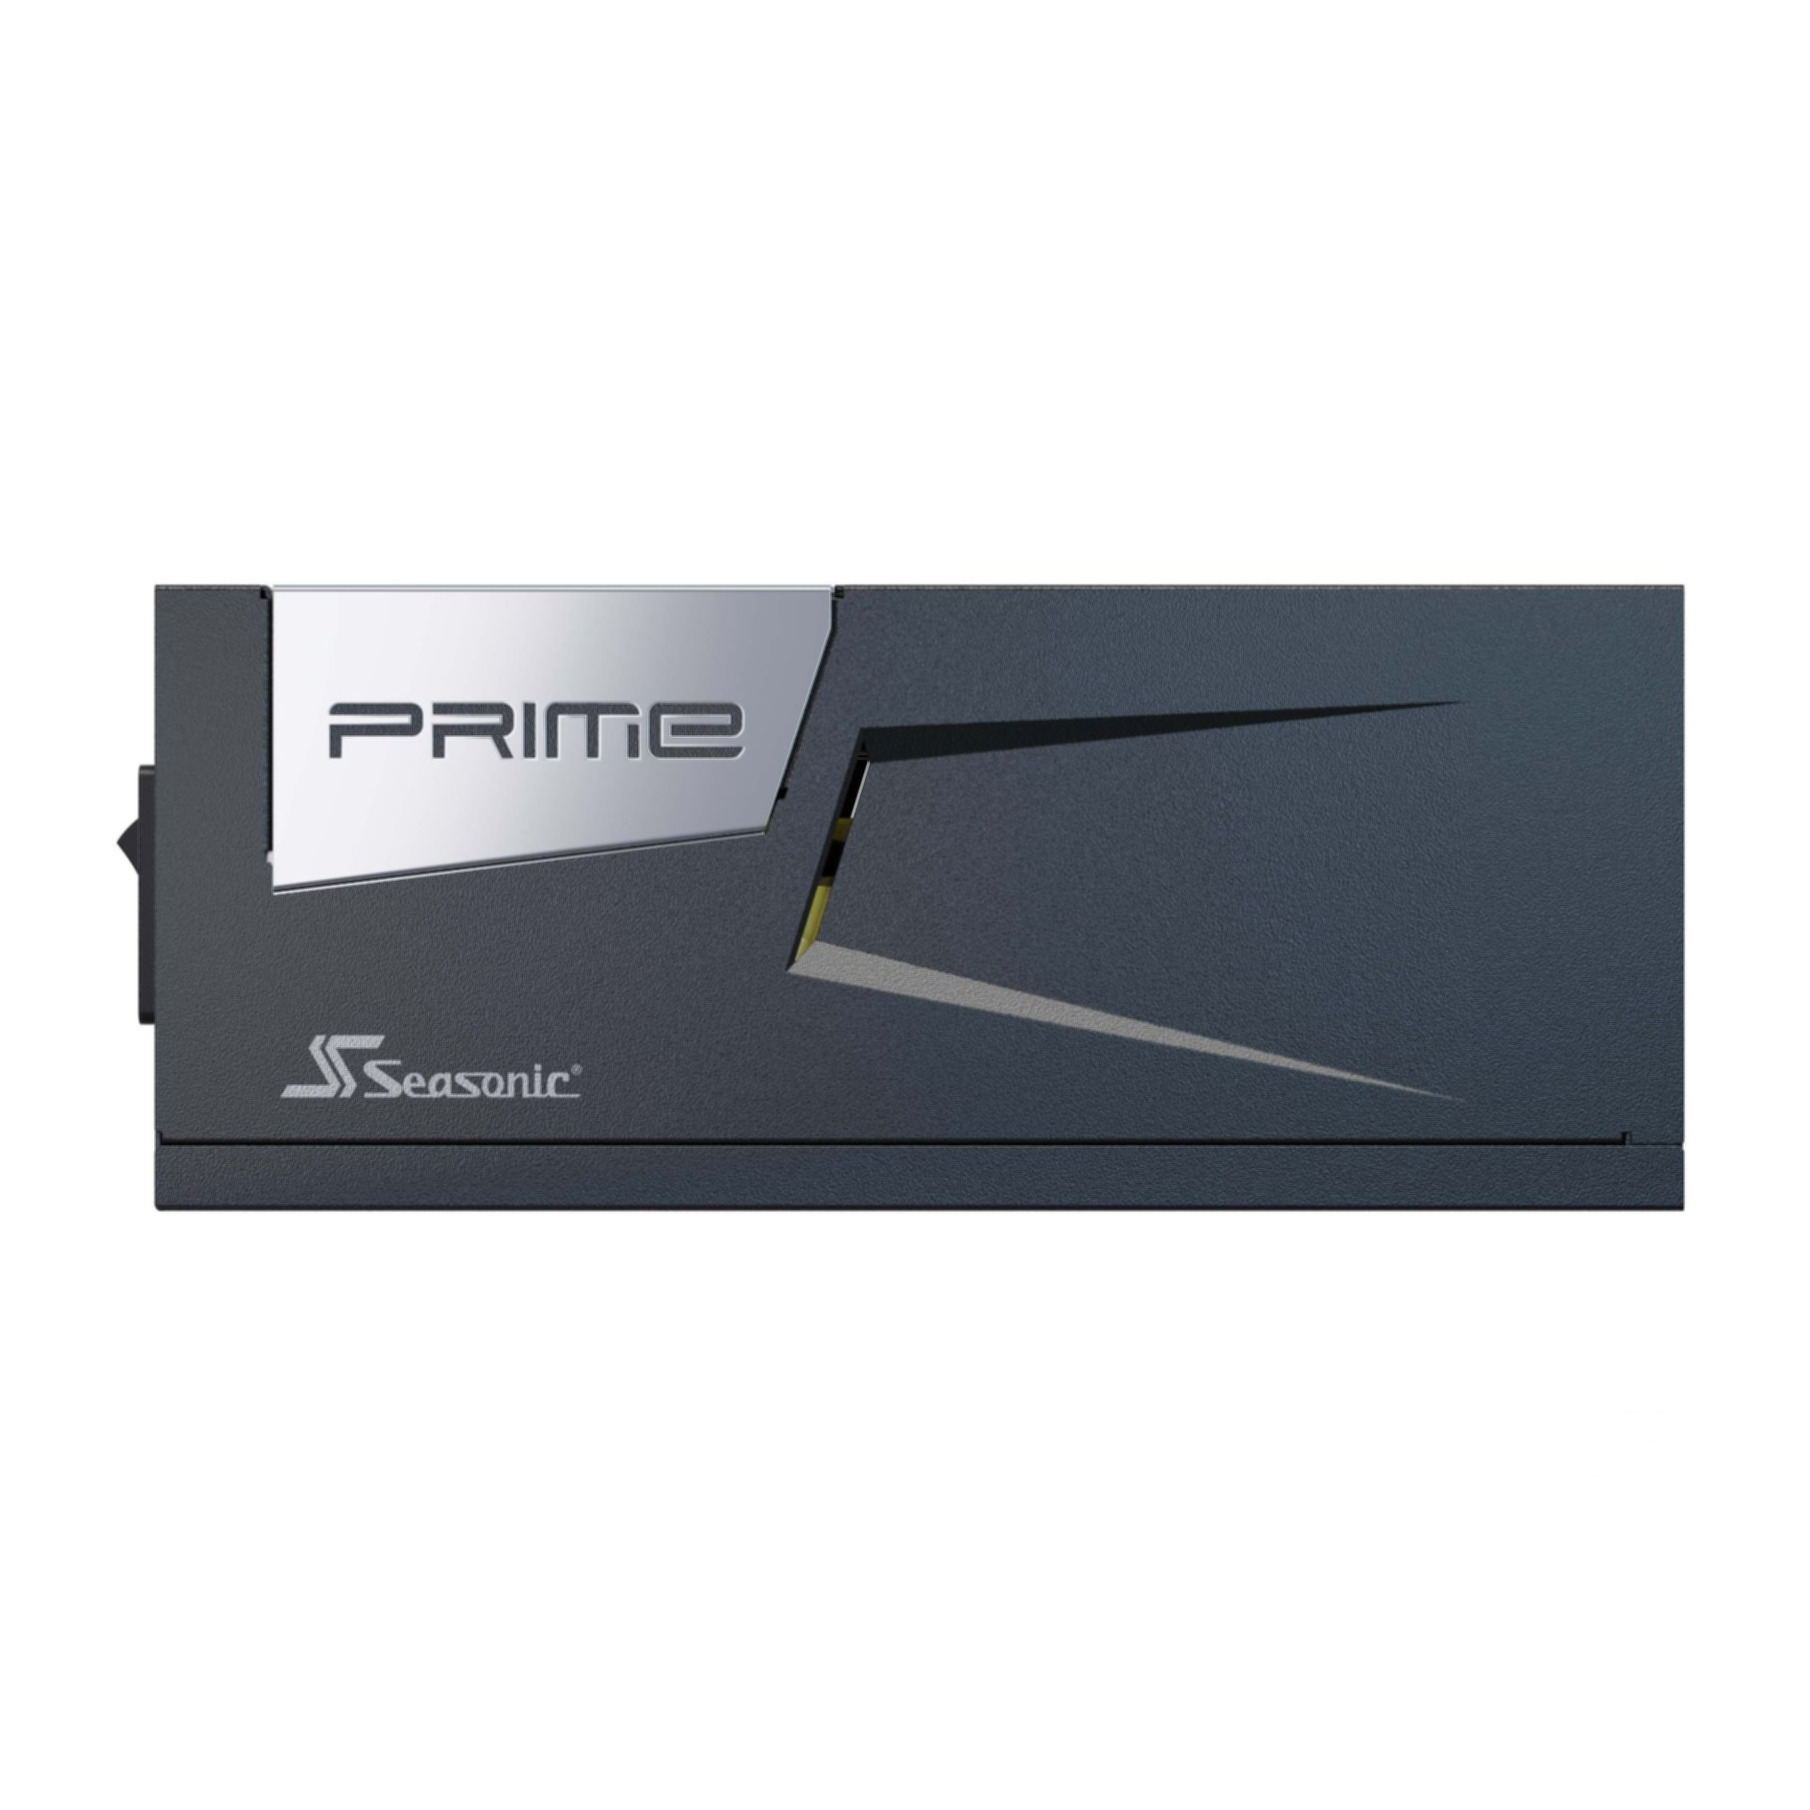 1,600 PRIME PC SEASONIC Netzteil 3.0 Watt ATX TX-1600